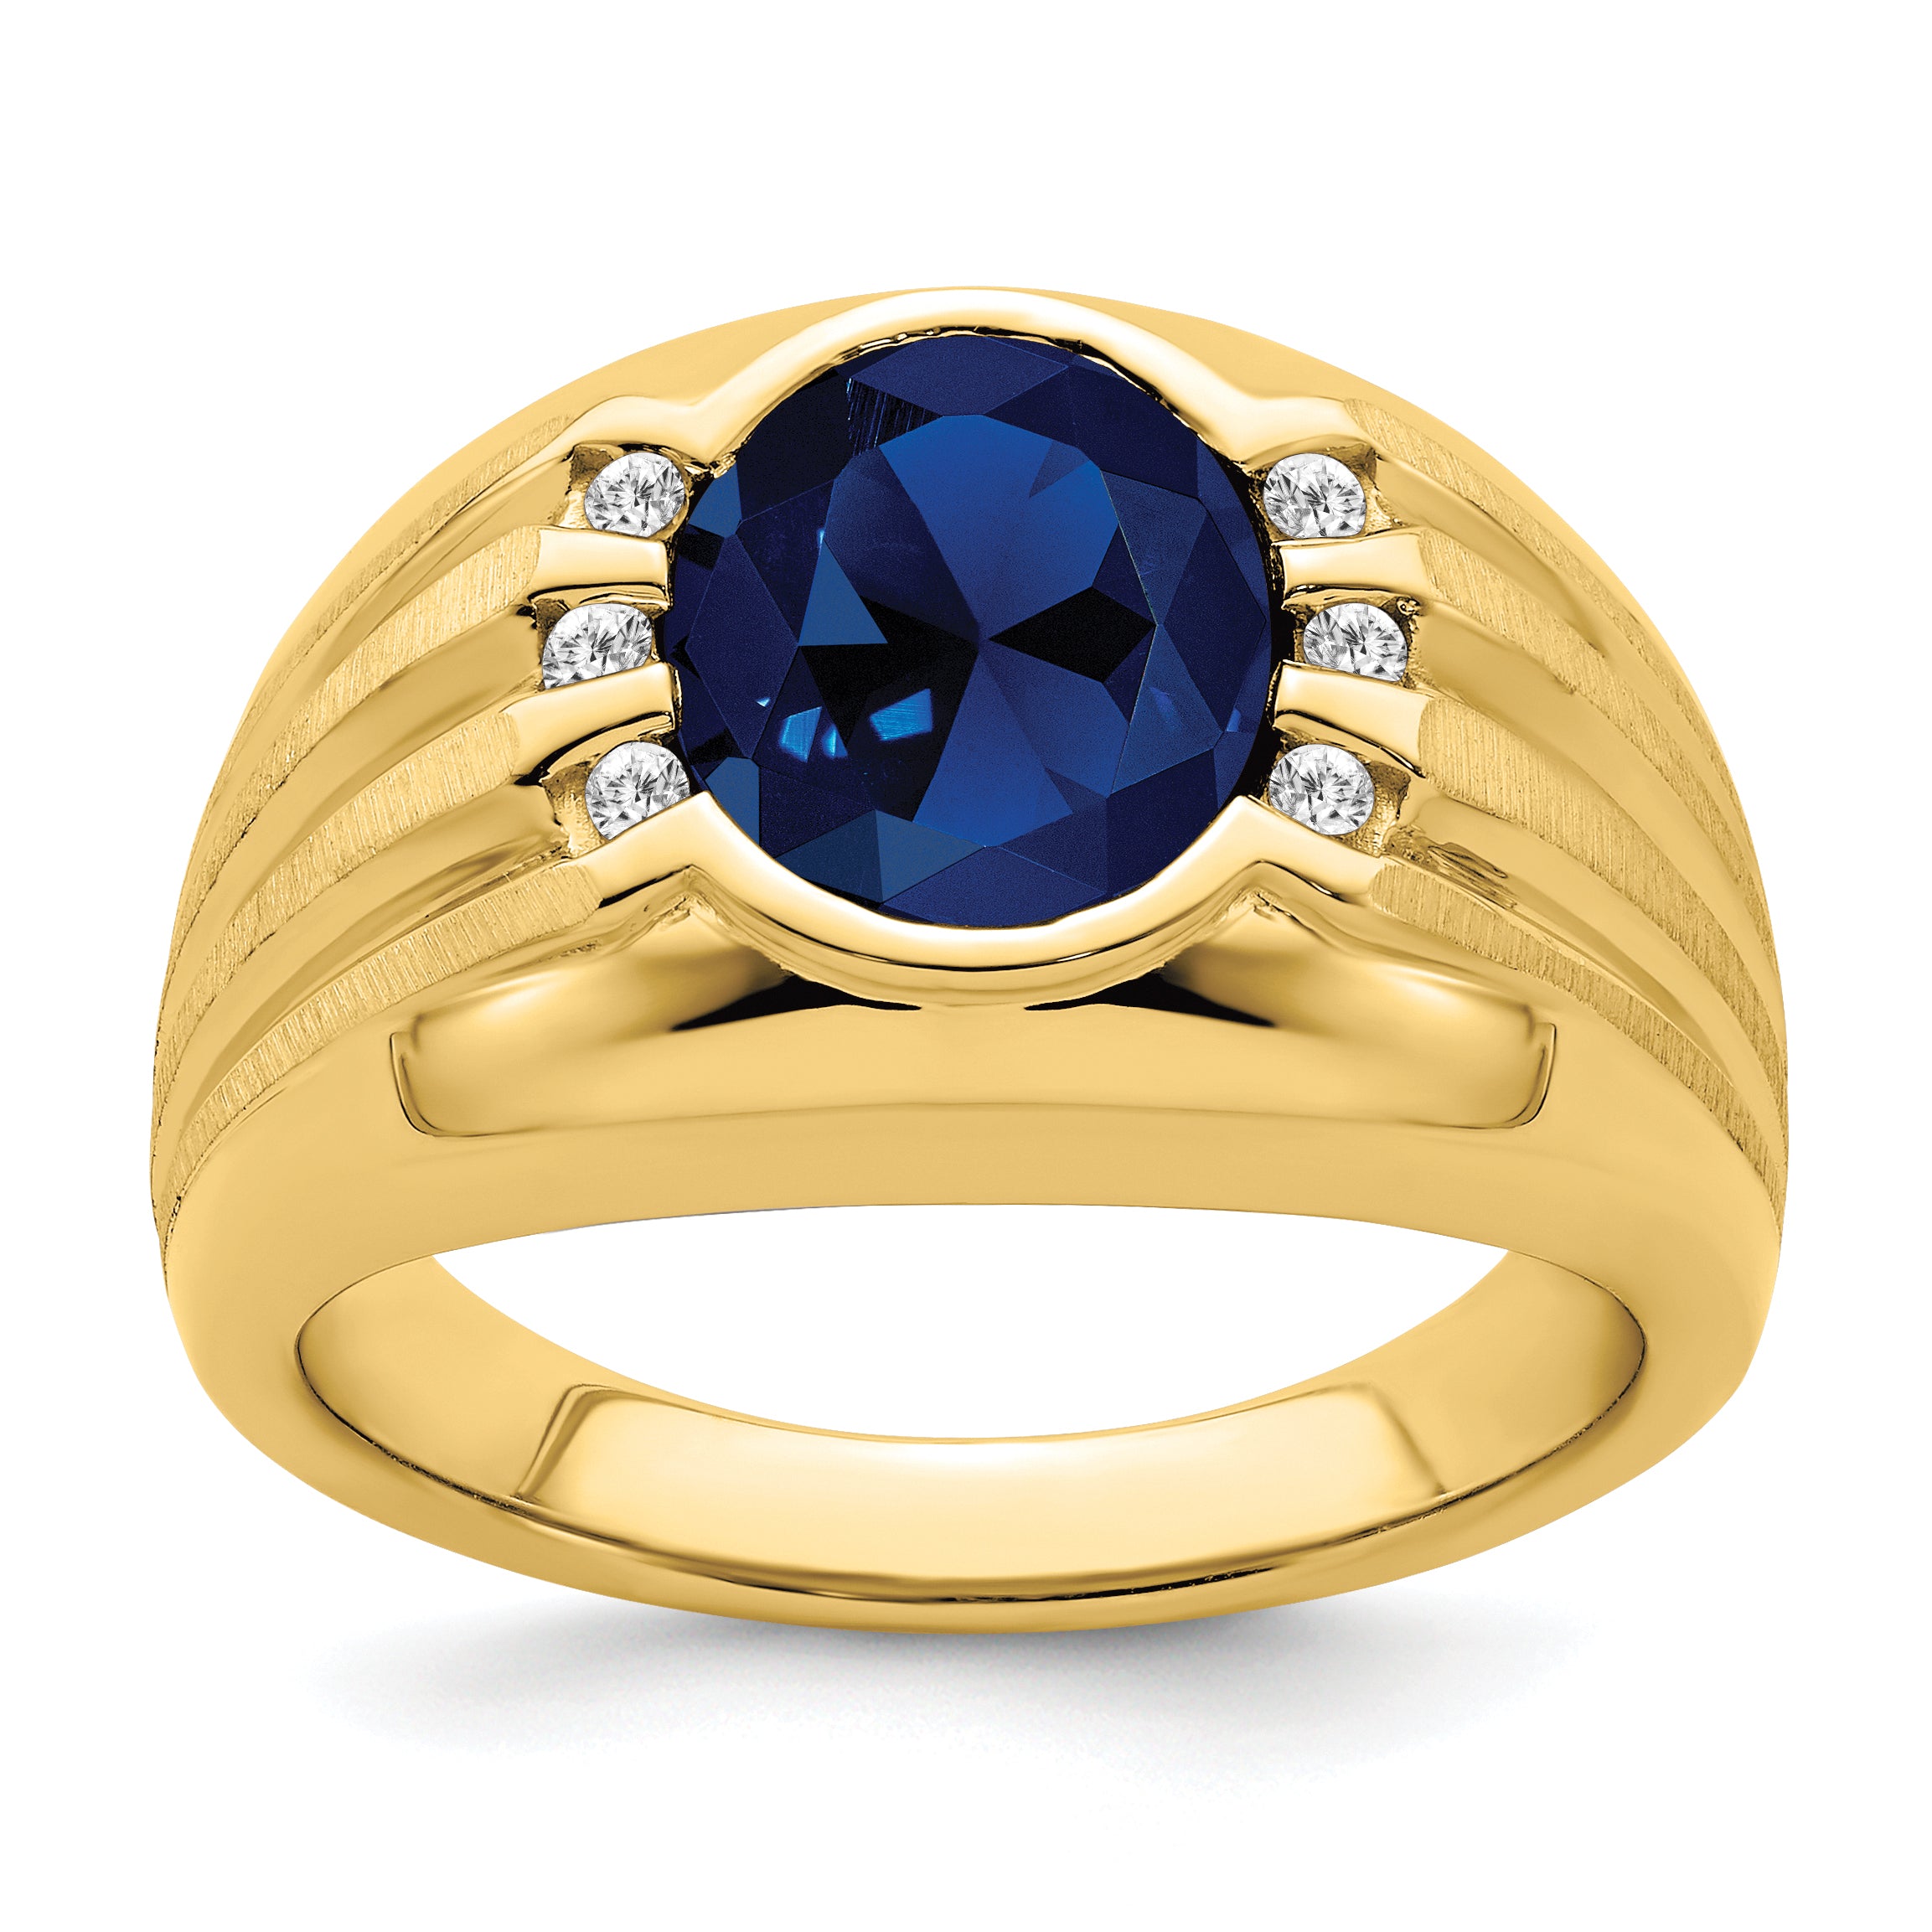 10K Created Sapphire and Diamond Mens Ring